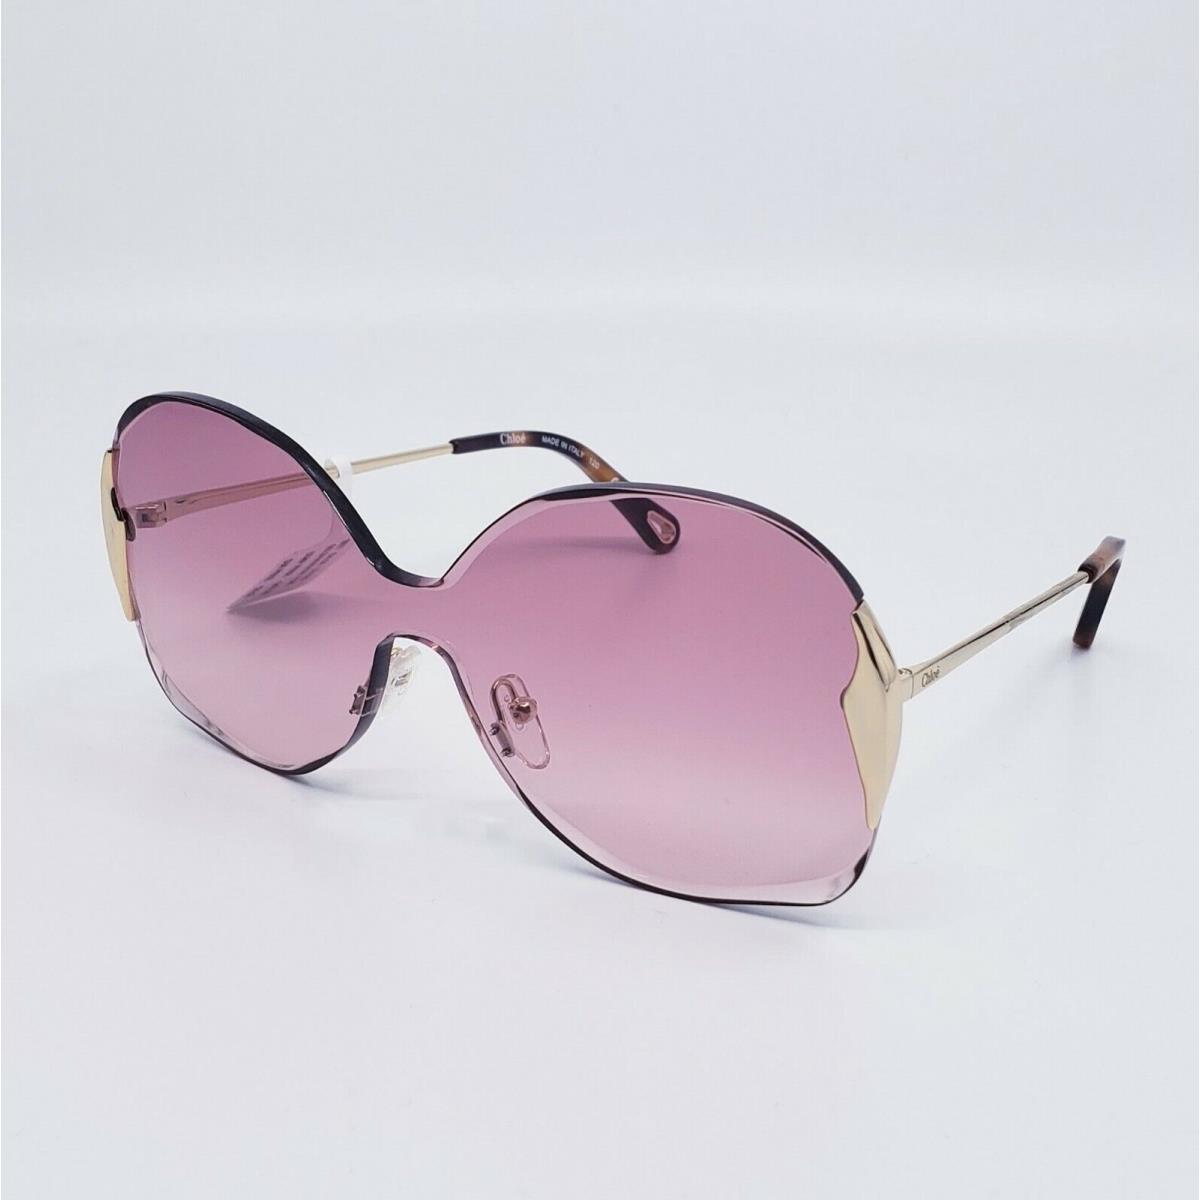 Chloé Chlo Women Sunglasses CE 162S 850 Gold Metal Oversized Pink Gradient Lens